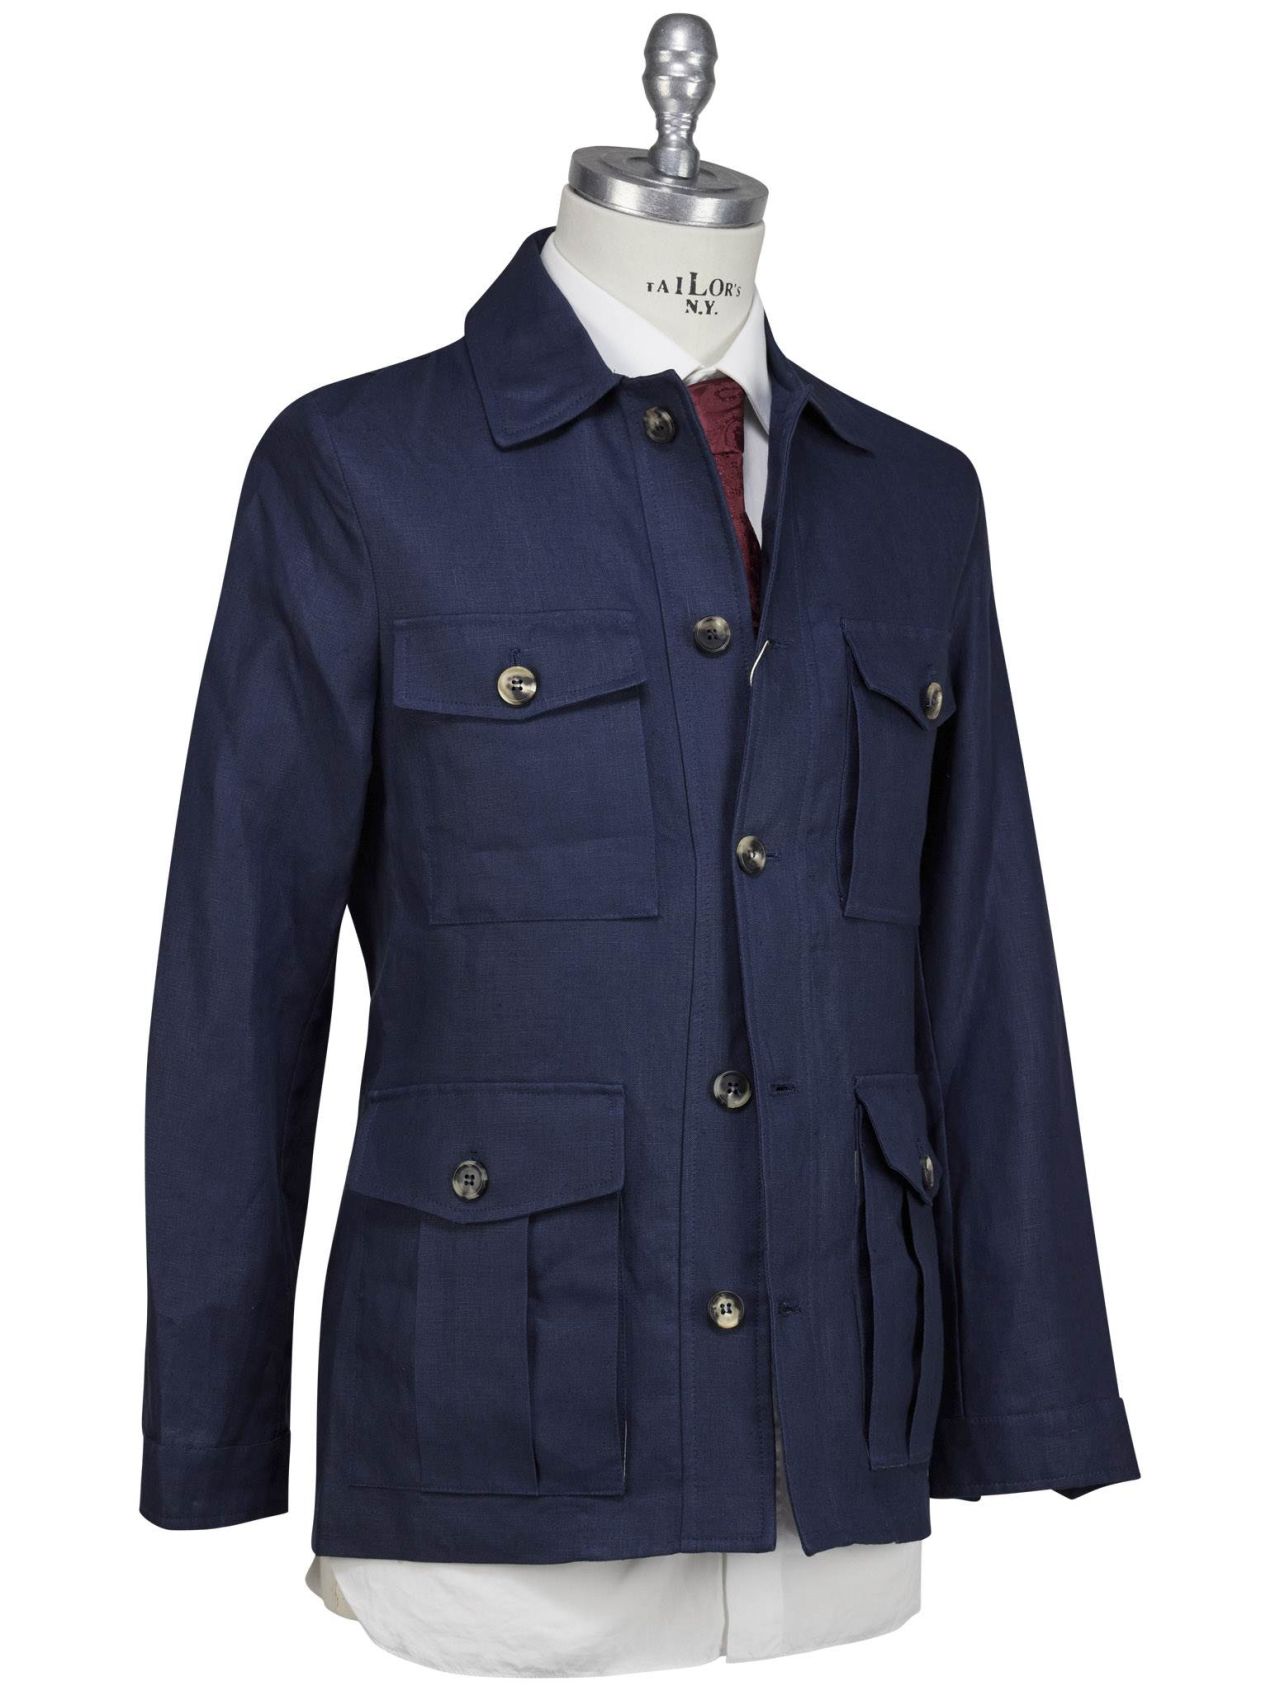 LUIGI BERTOLLI CITY Blue Moto Jacket - size 42 - $28 - From Eva